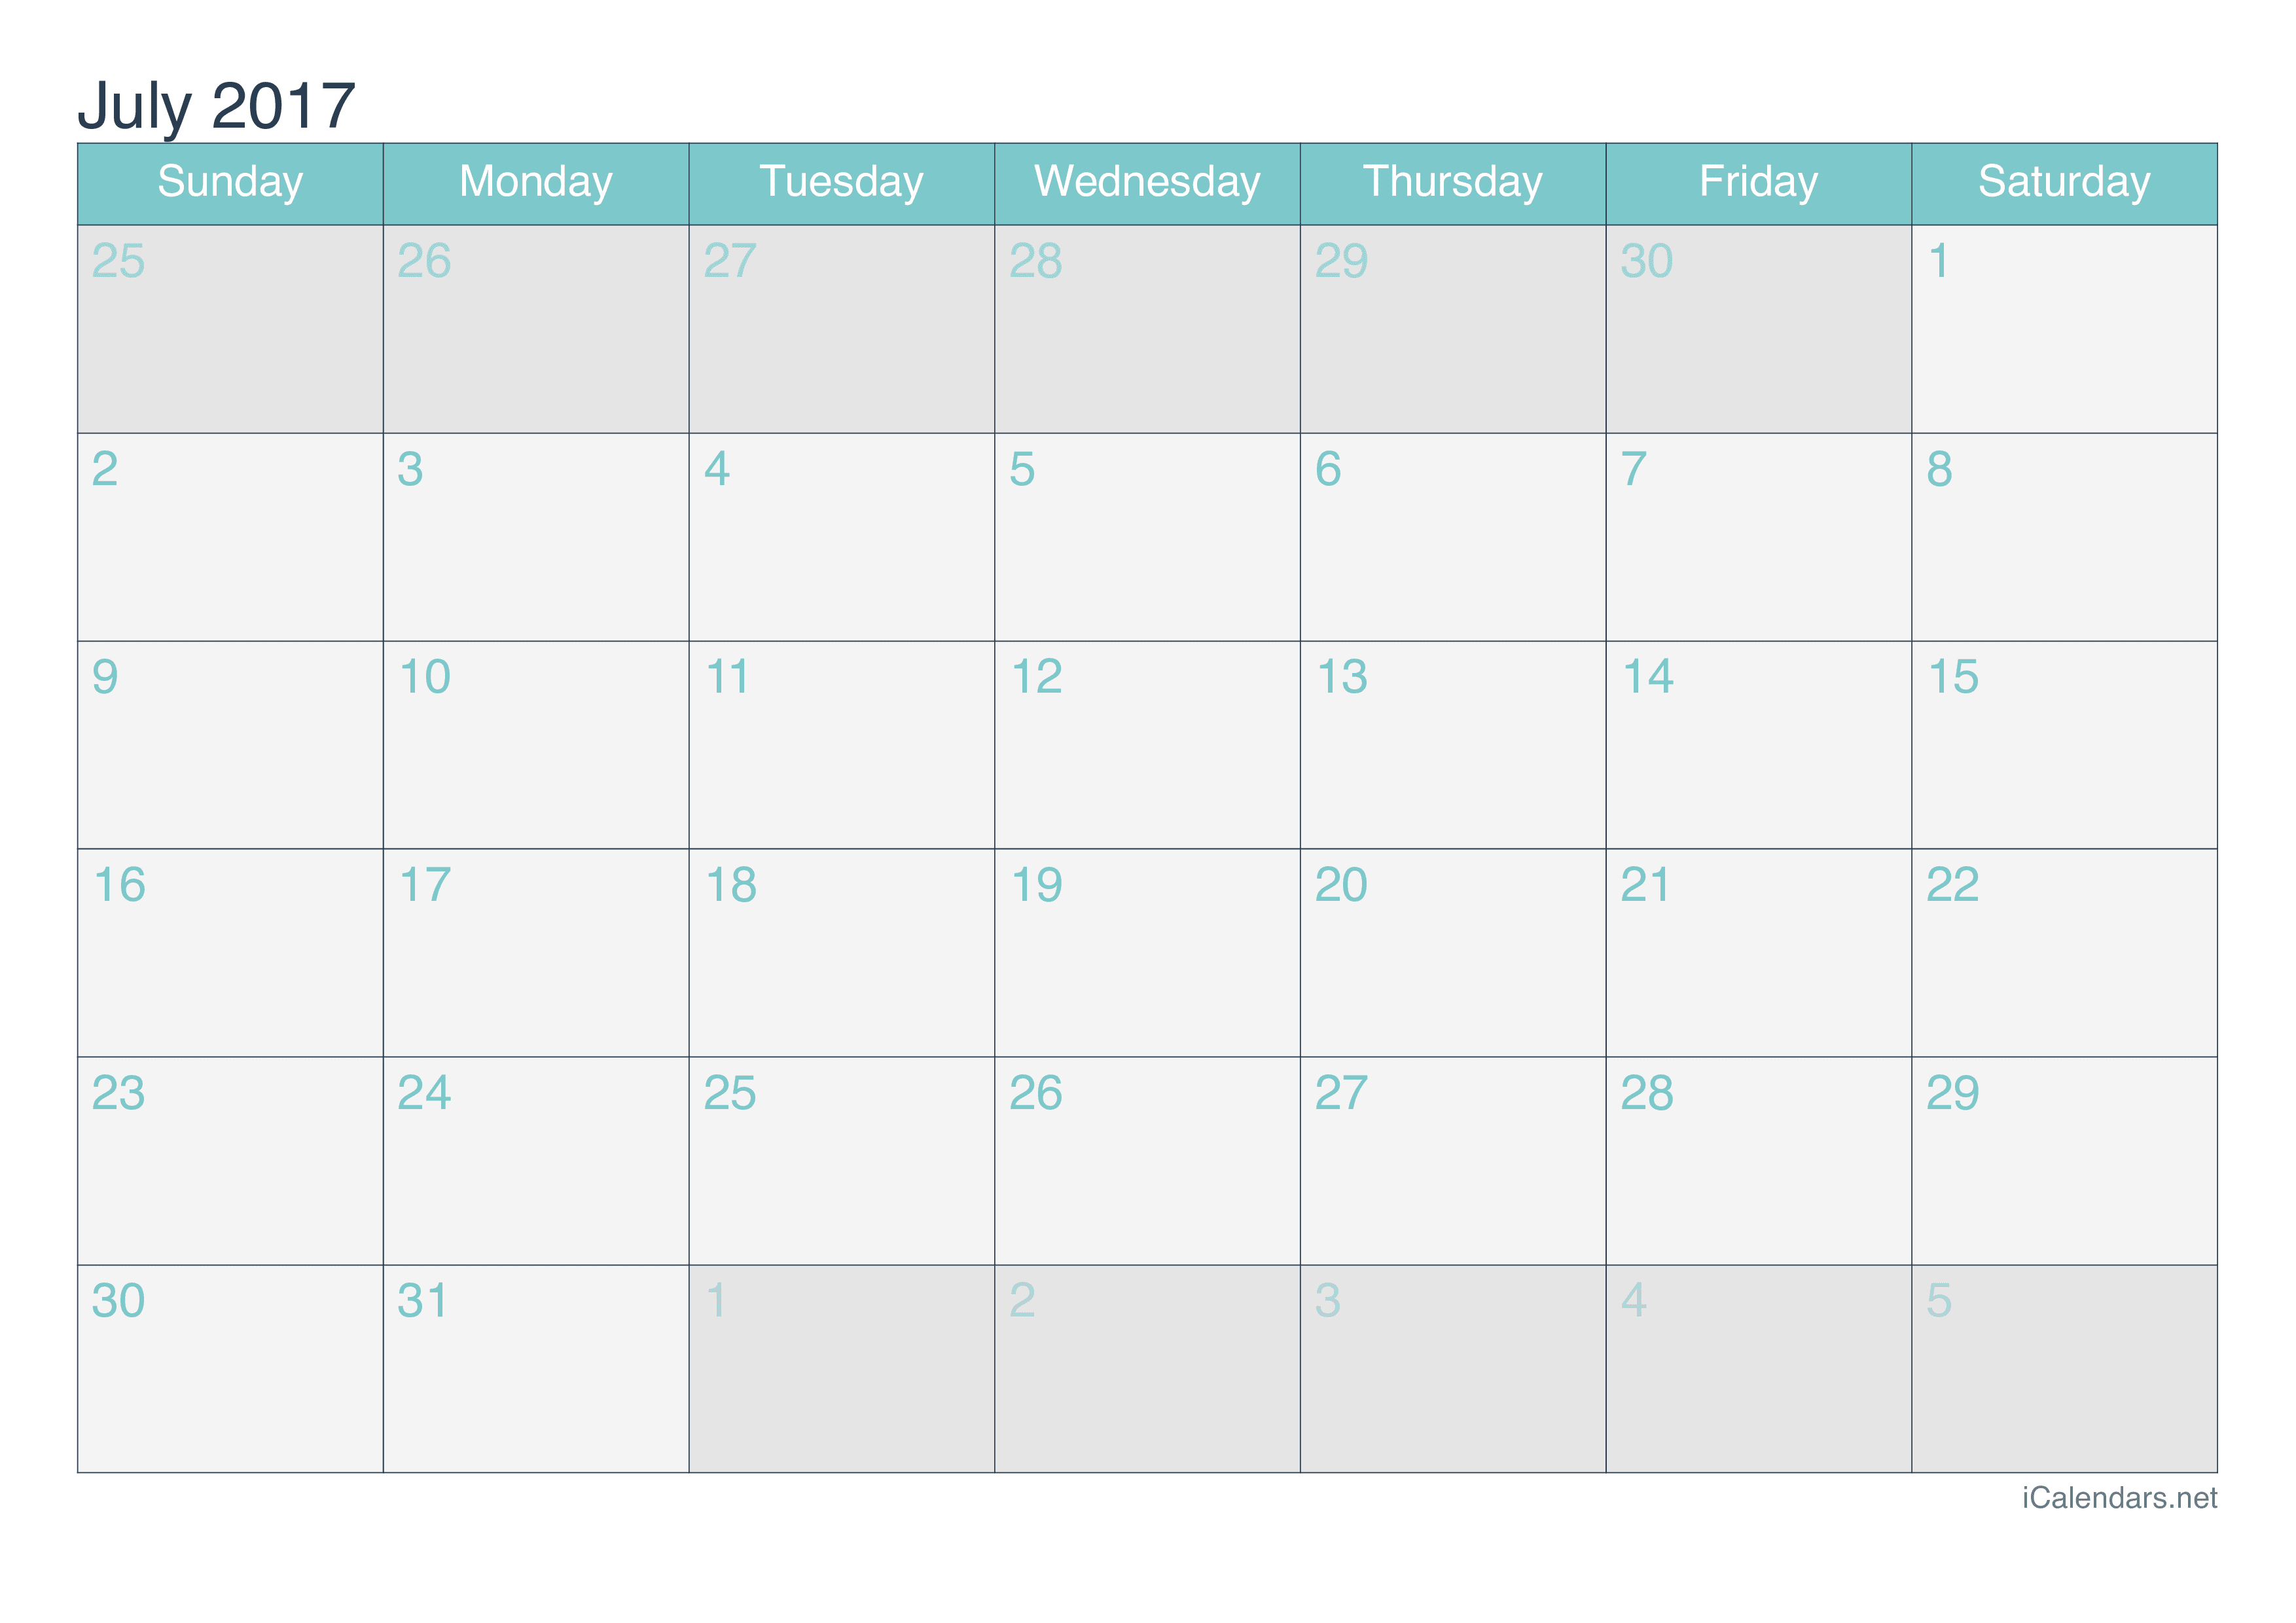 July 2017 Printable Calendar icalendars net